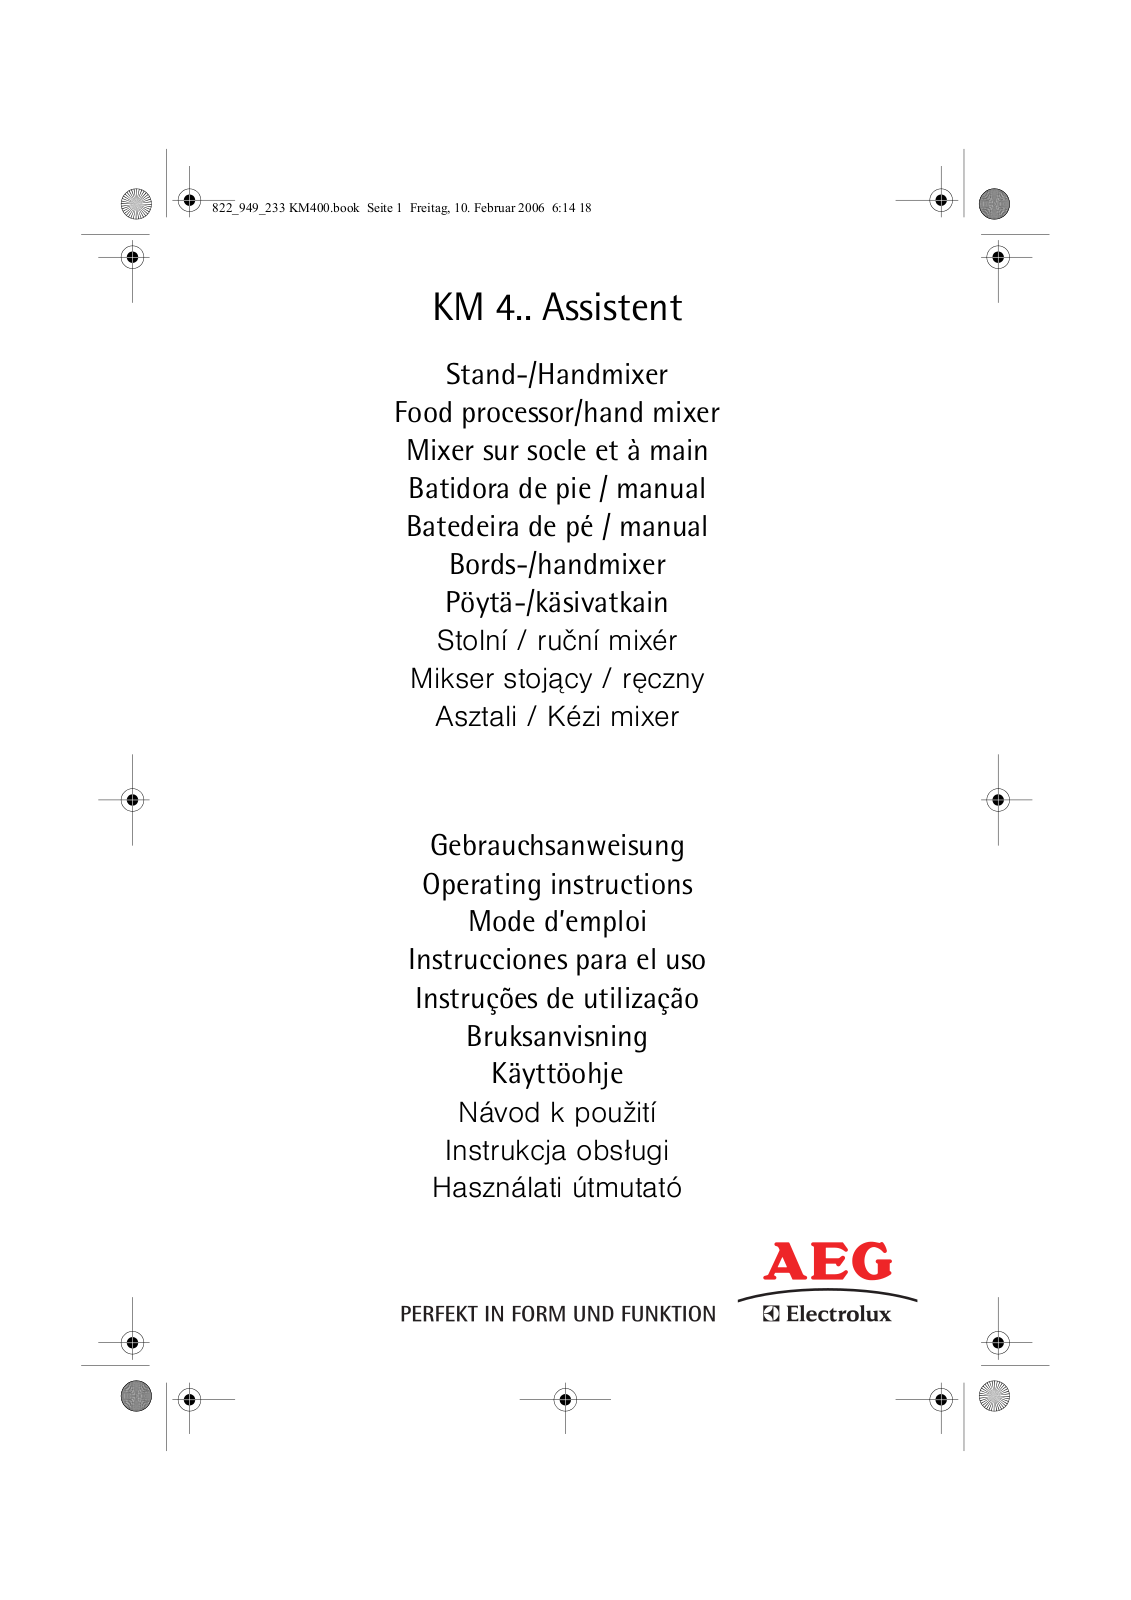 Aeg-electrolux ASSISTENT KM 450 Manual